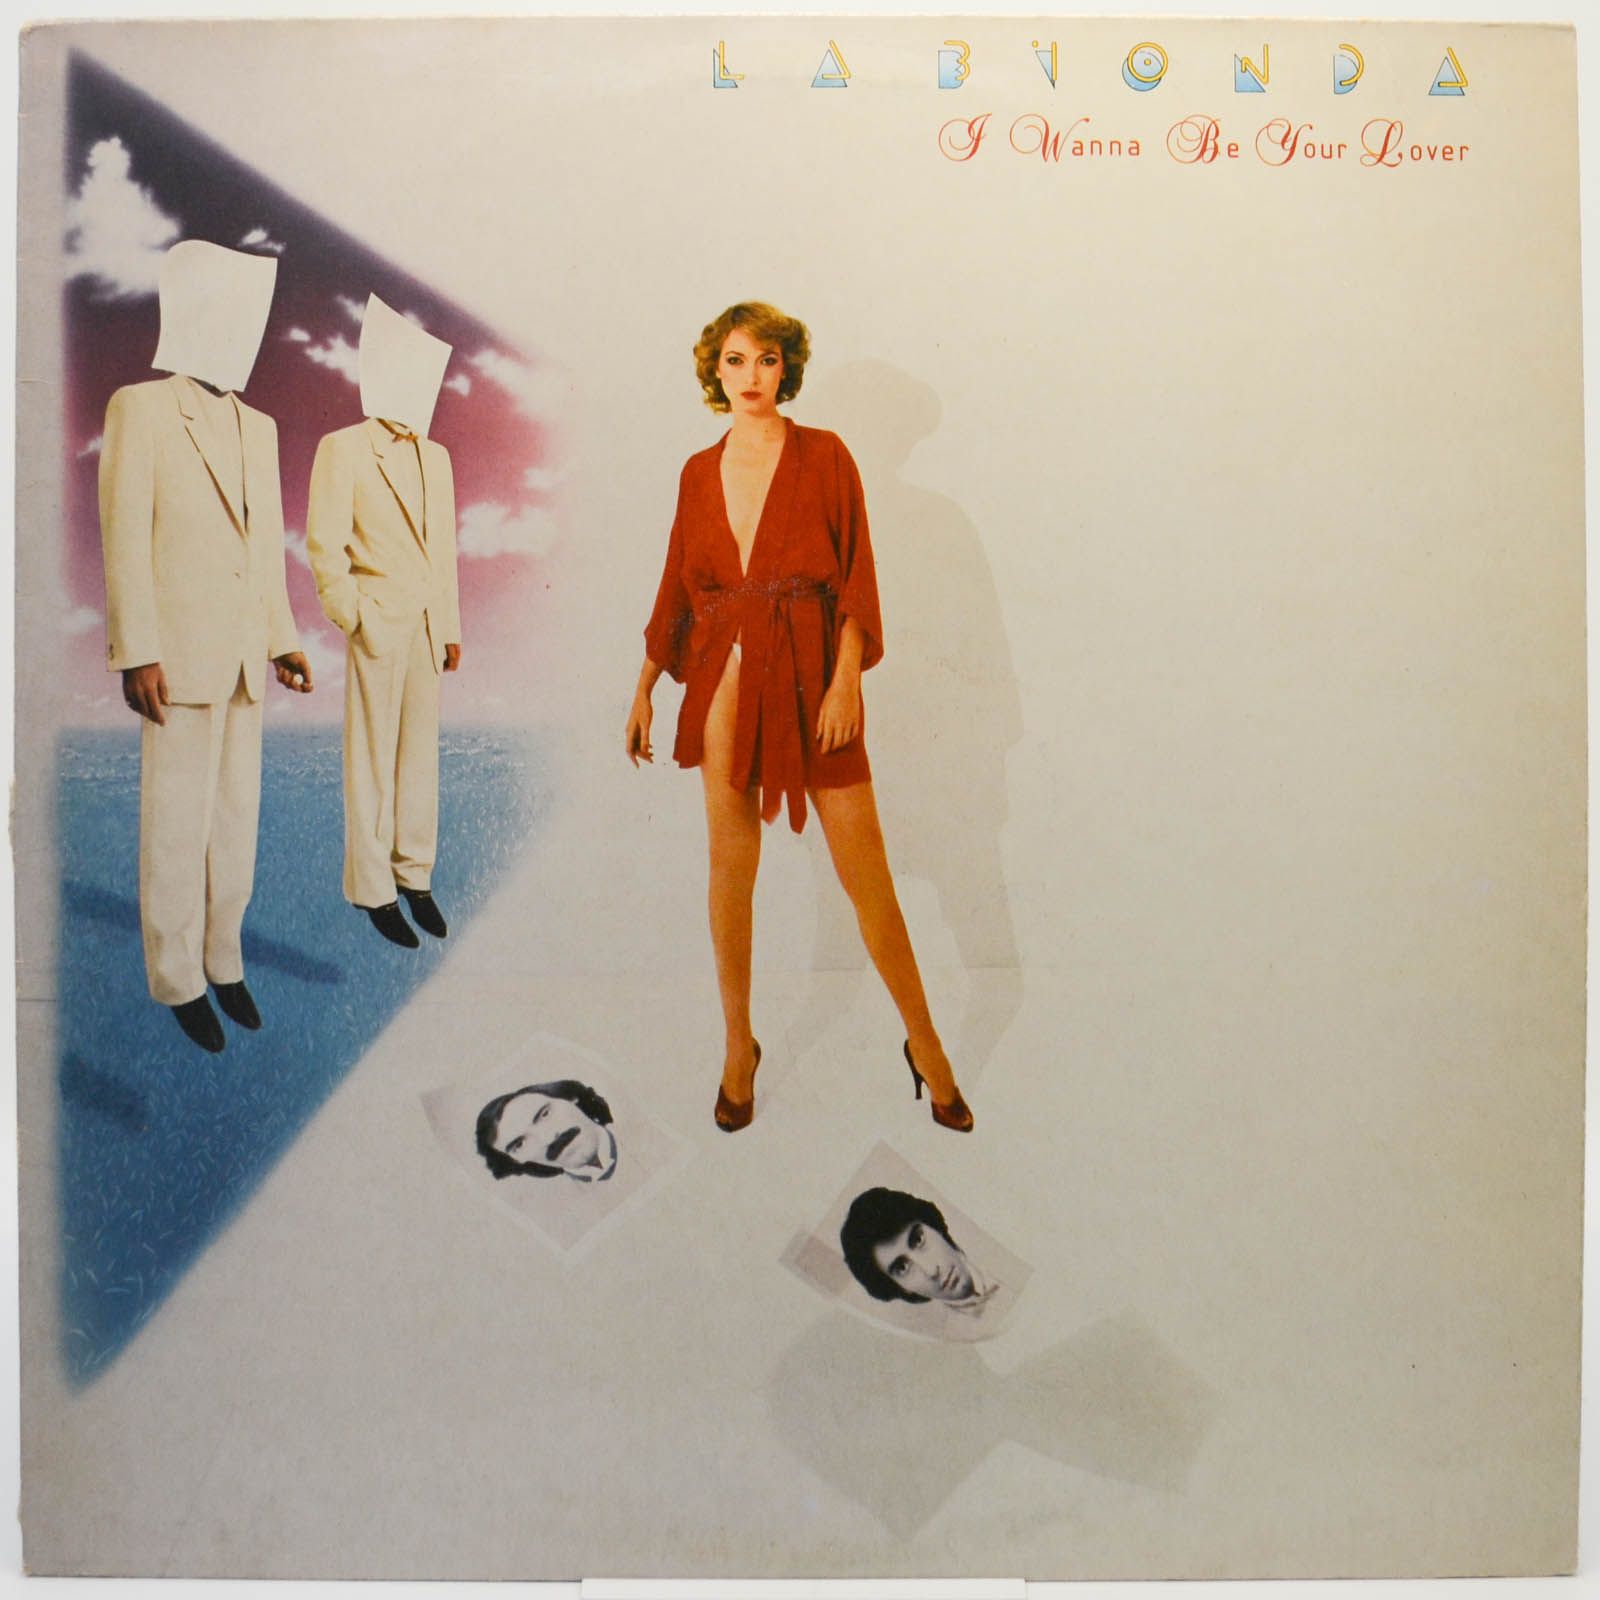 La Bionda — I Wanna Be Your Lover, 1981